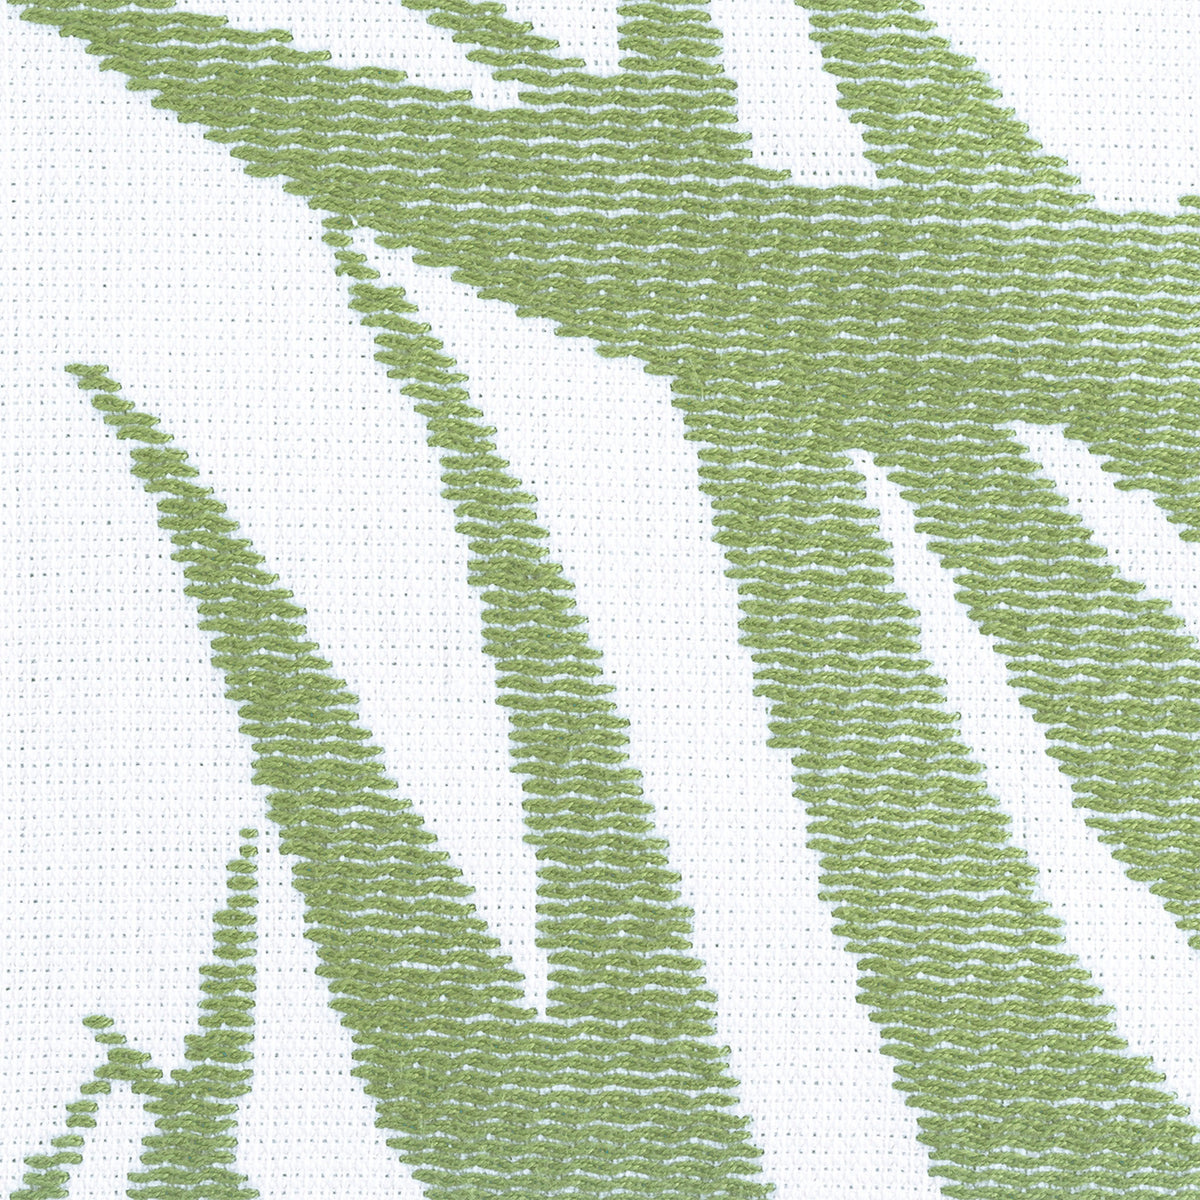 Swatch Sample of Matouk Zebra Palm Beach Towels in Color Jungle